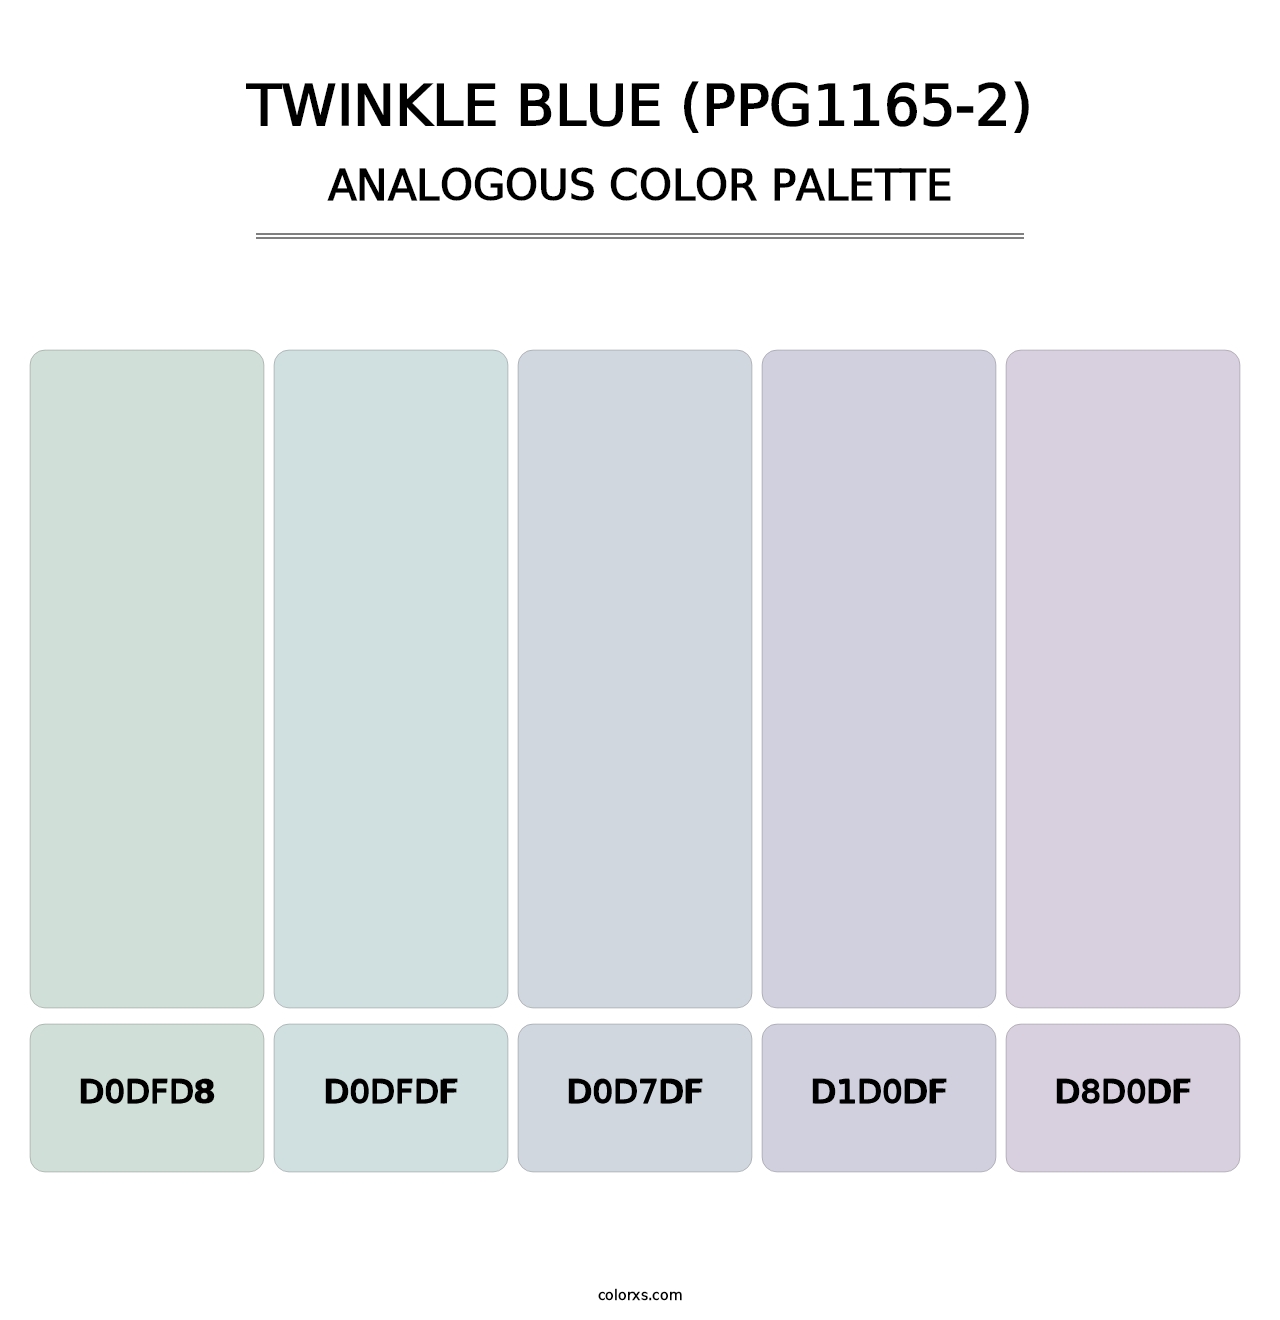 Twinkle Blue (PPG1165-2) - Analogous Color Palette